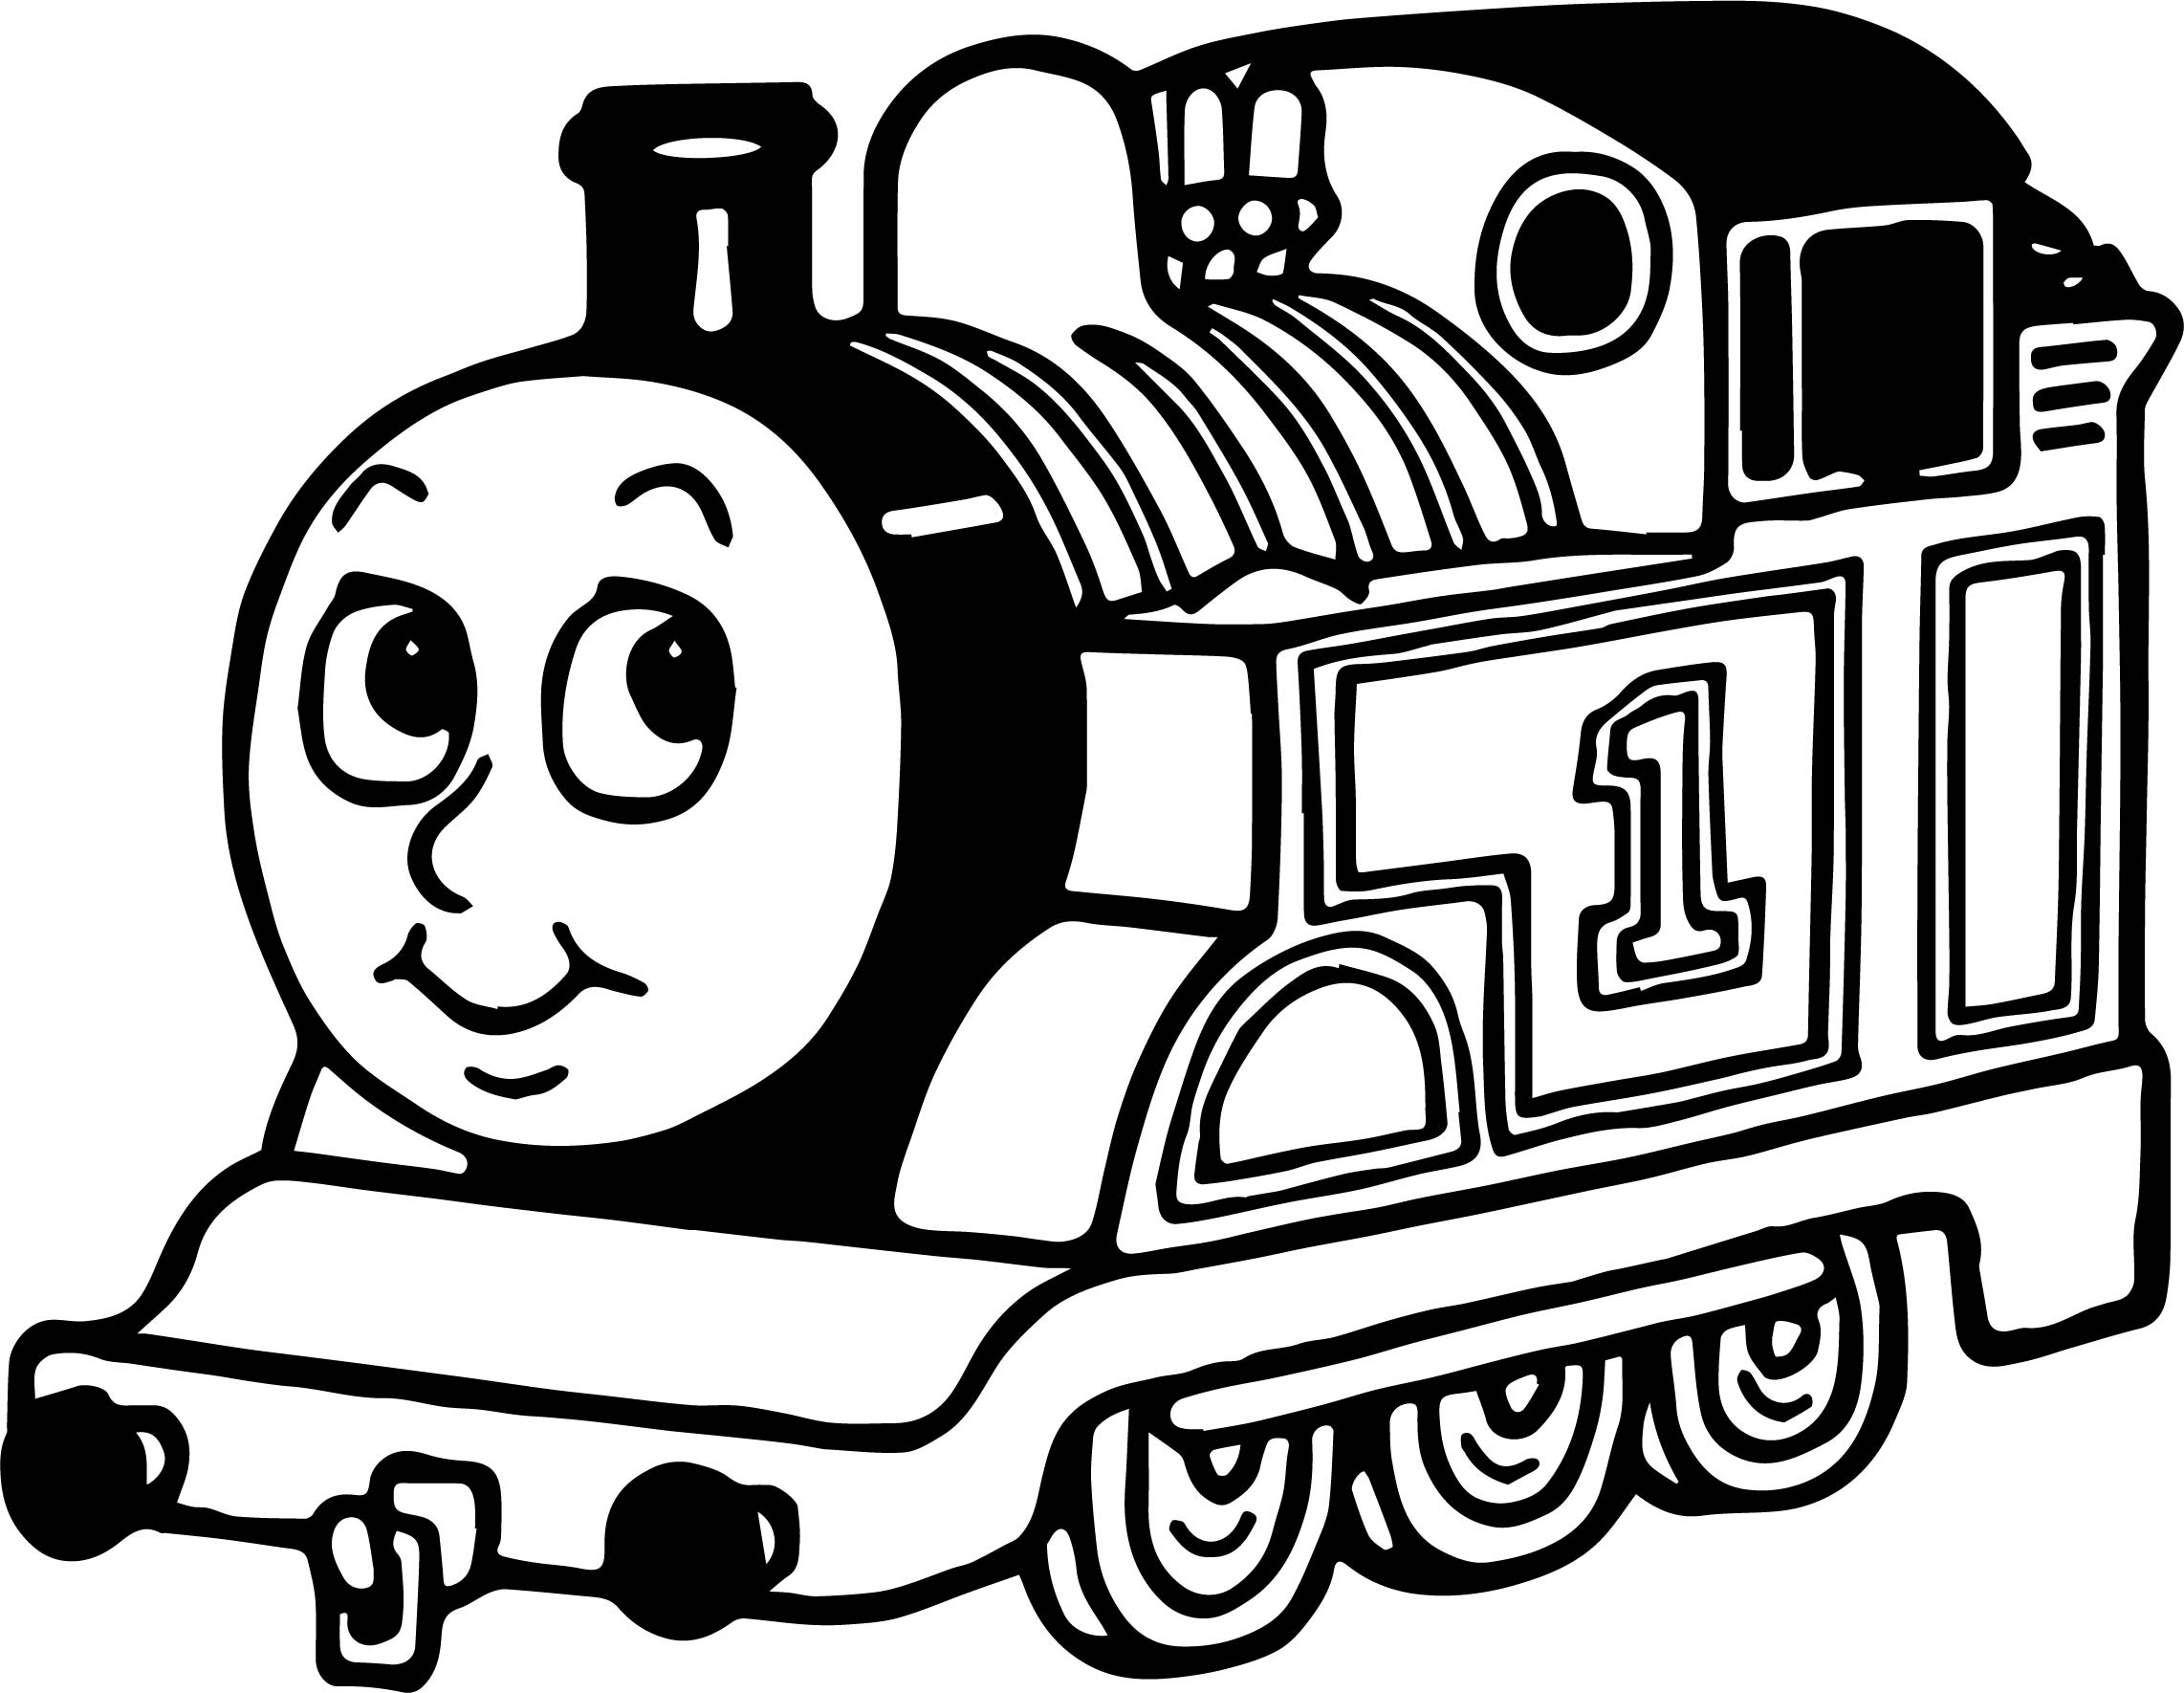 Thomas the Tank Engine Number 1